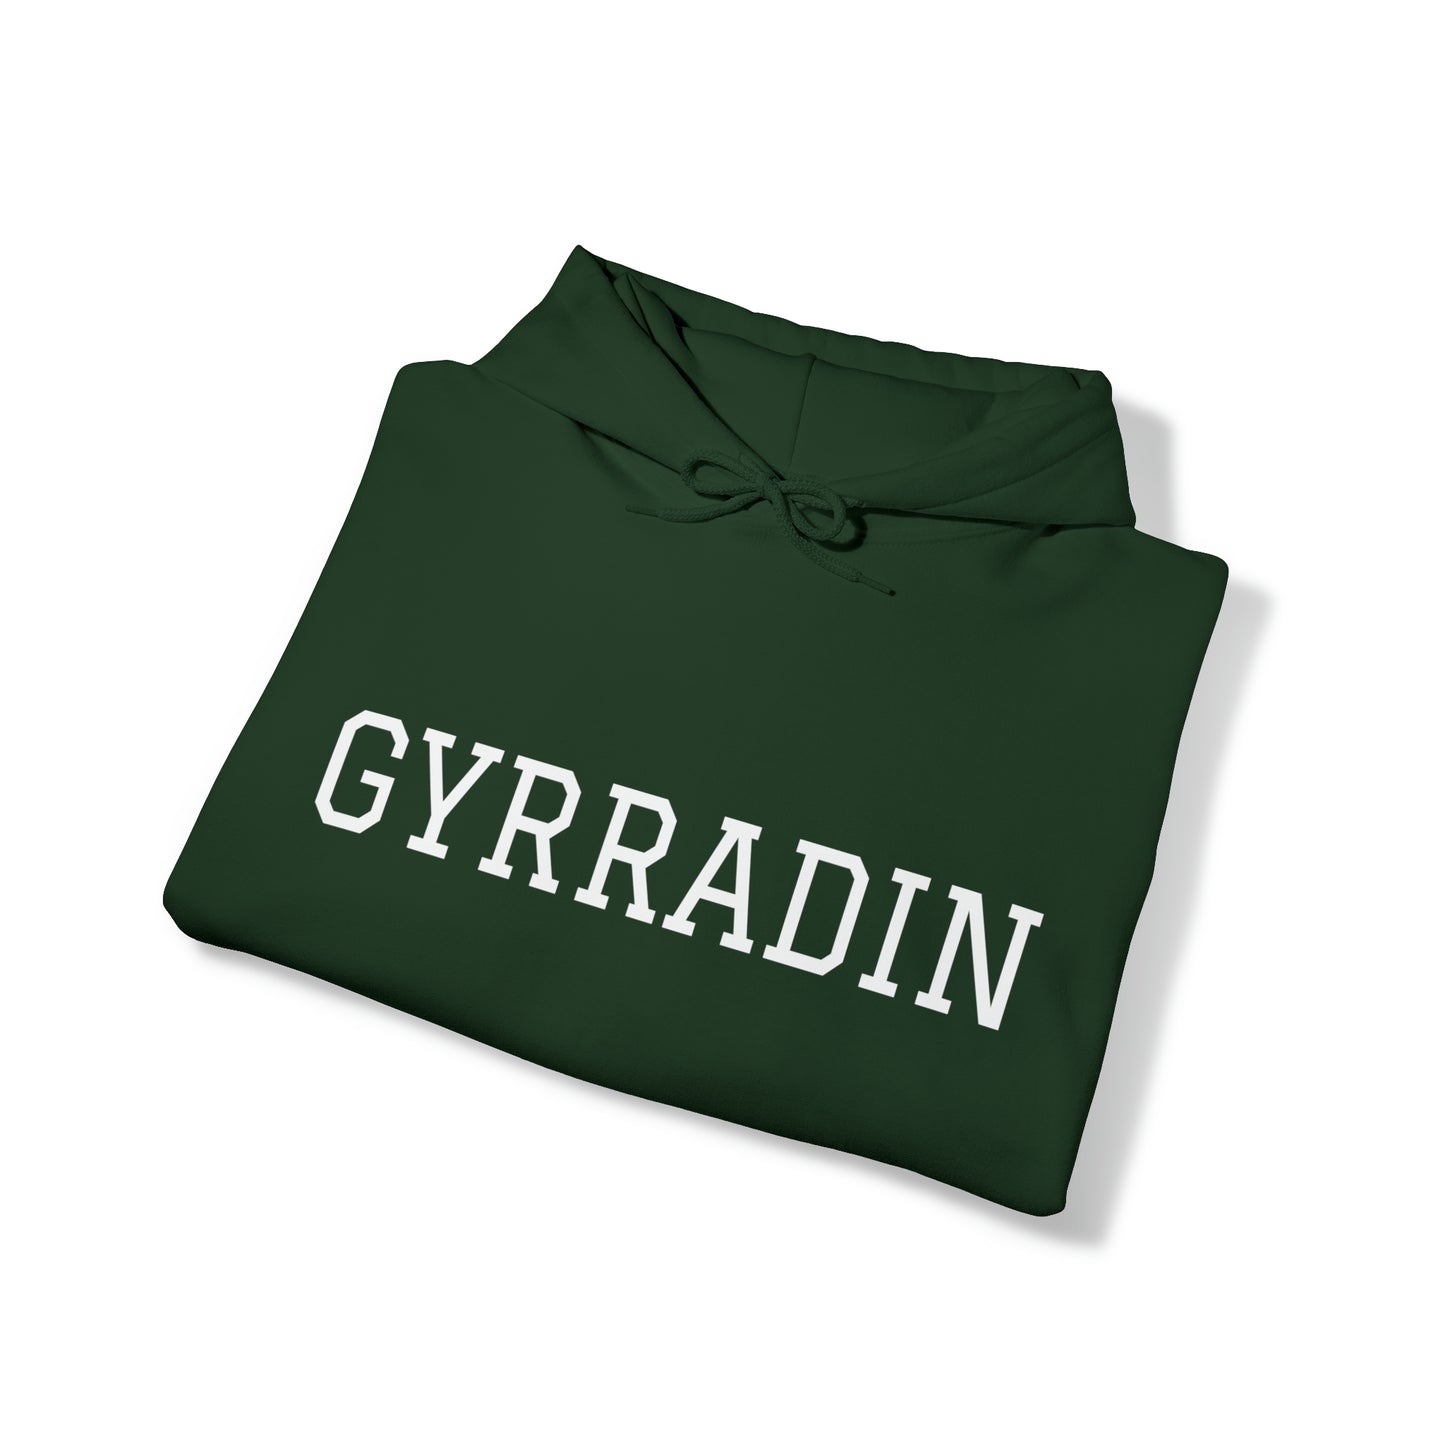 GYRRADIN // HOODIE